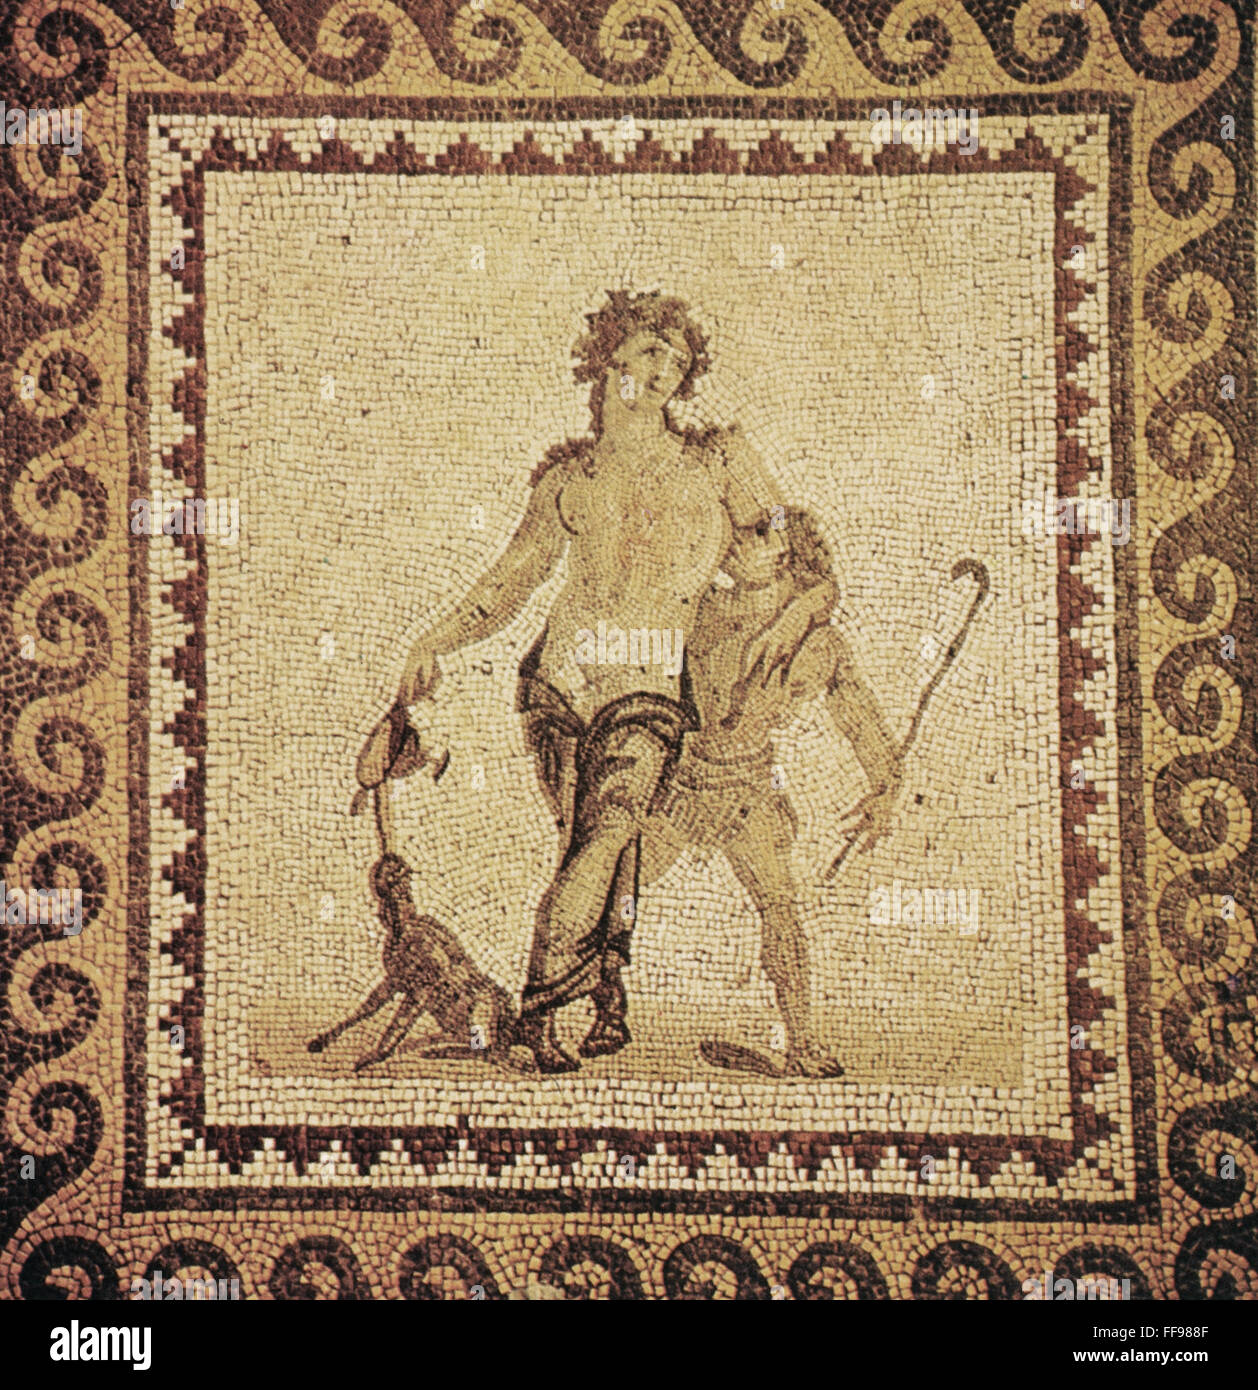 DIONYSUS/BACCHUS. /nIonian mosaic from Antioch, Turkey. Stock Photo